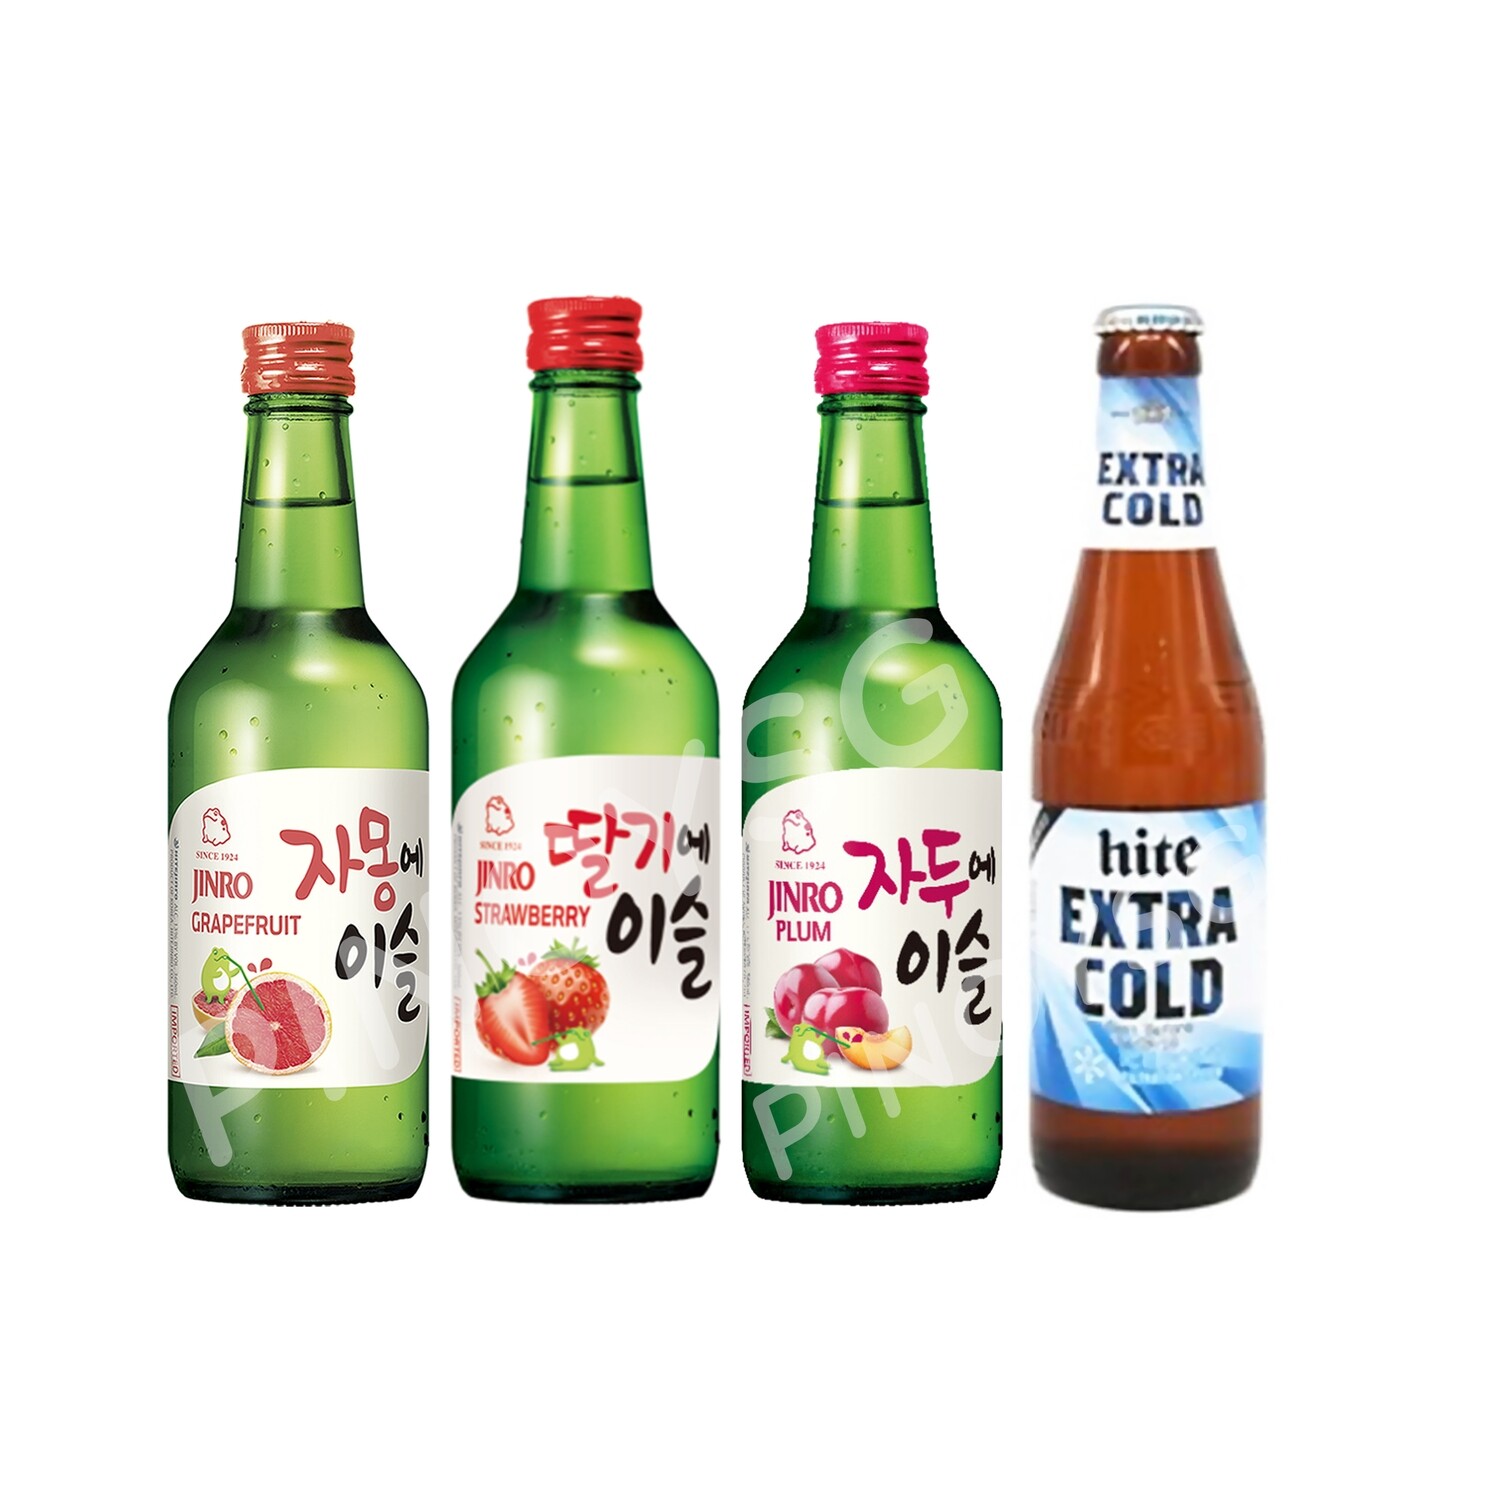 1 Jinro Grapefruit 360ml, 1 Jinro Strawberry 360ml, 1 Jinro Plum 360ml, 1 FREE Hite Extra Cold Bottle 330ml